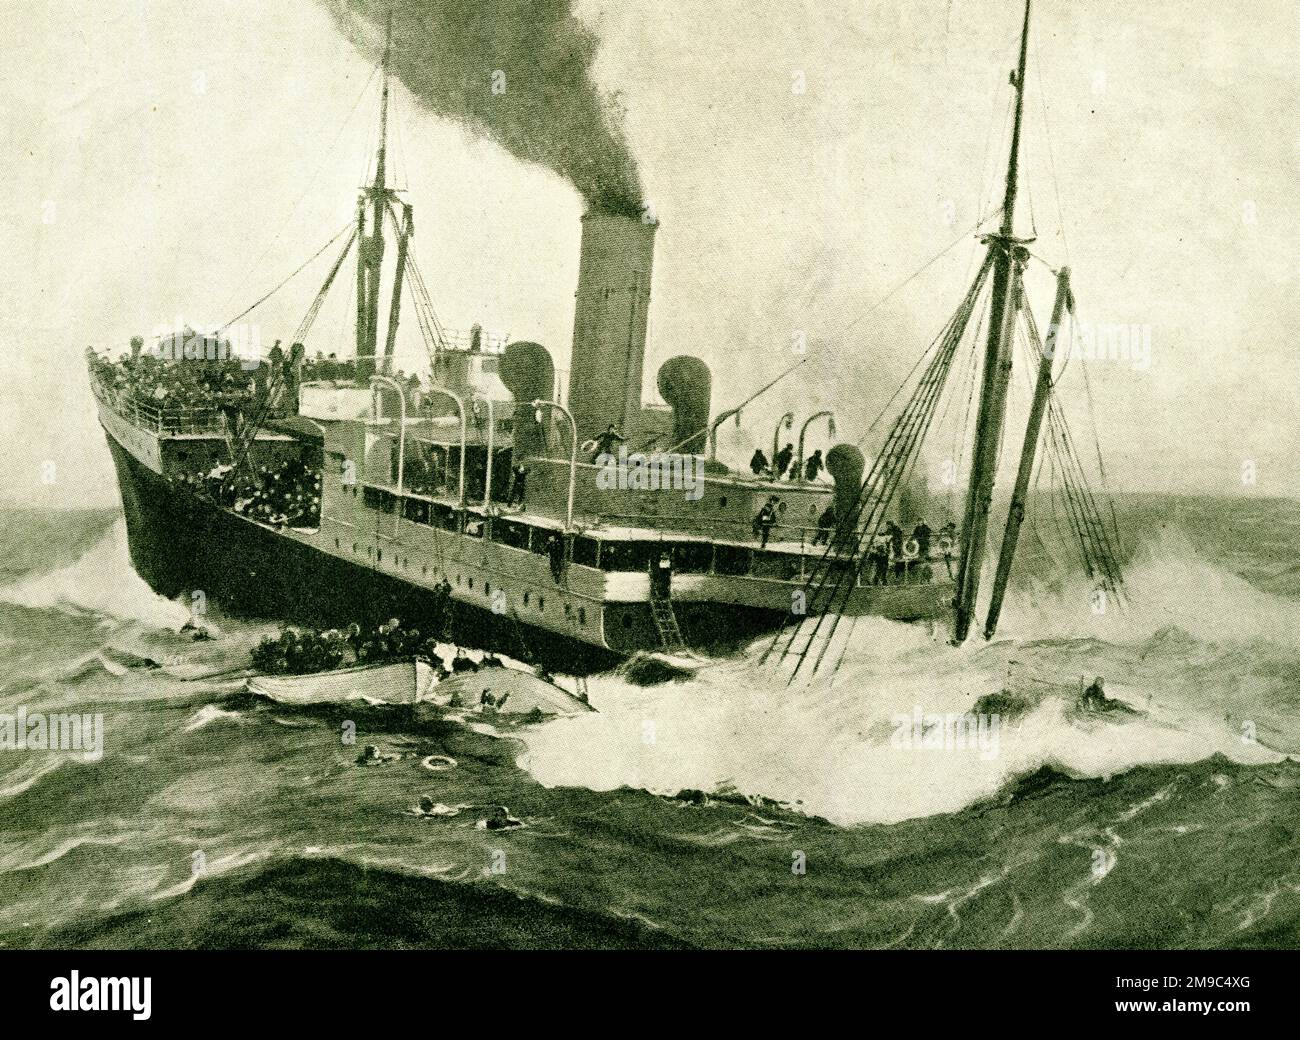 Abandon Ship, lifeboat alongside Stock Photo